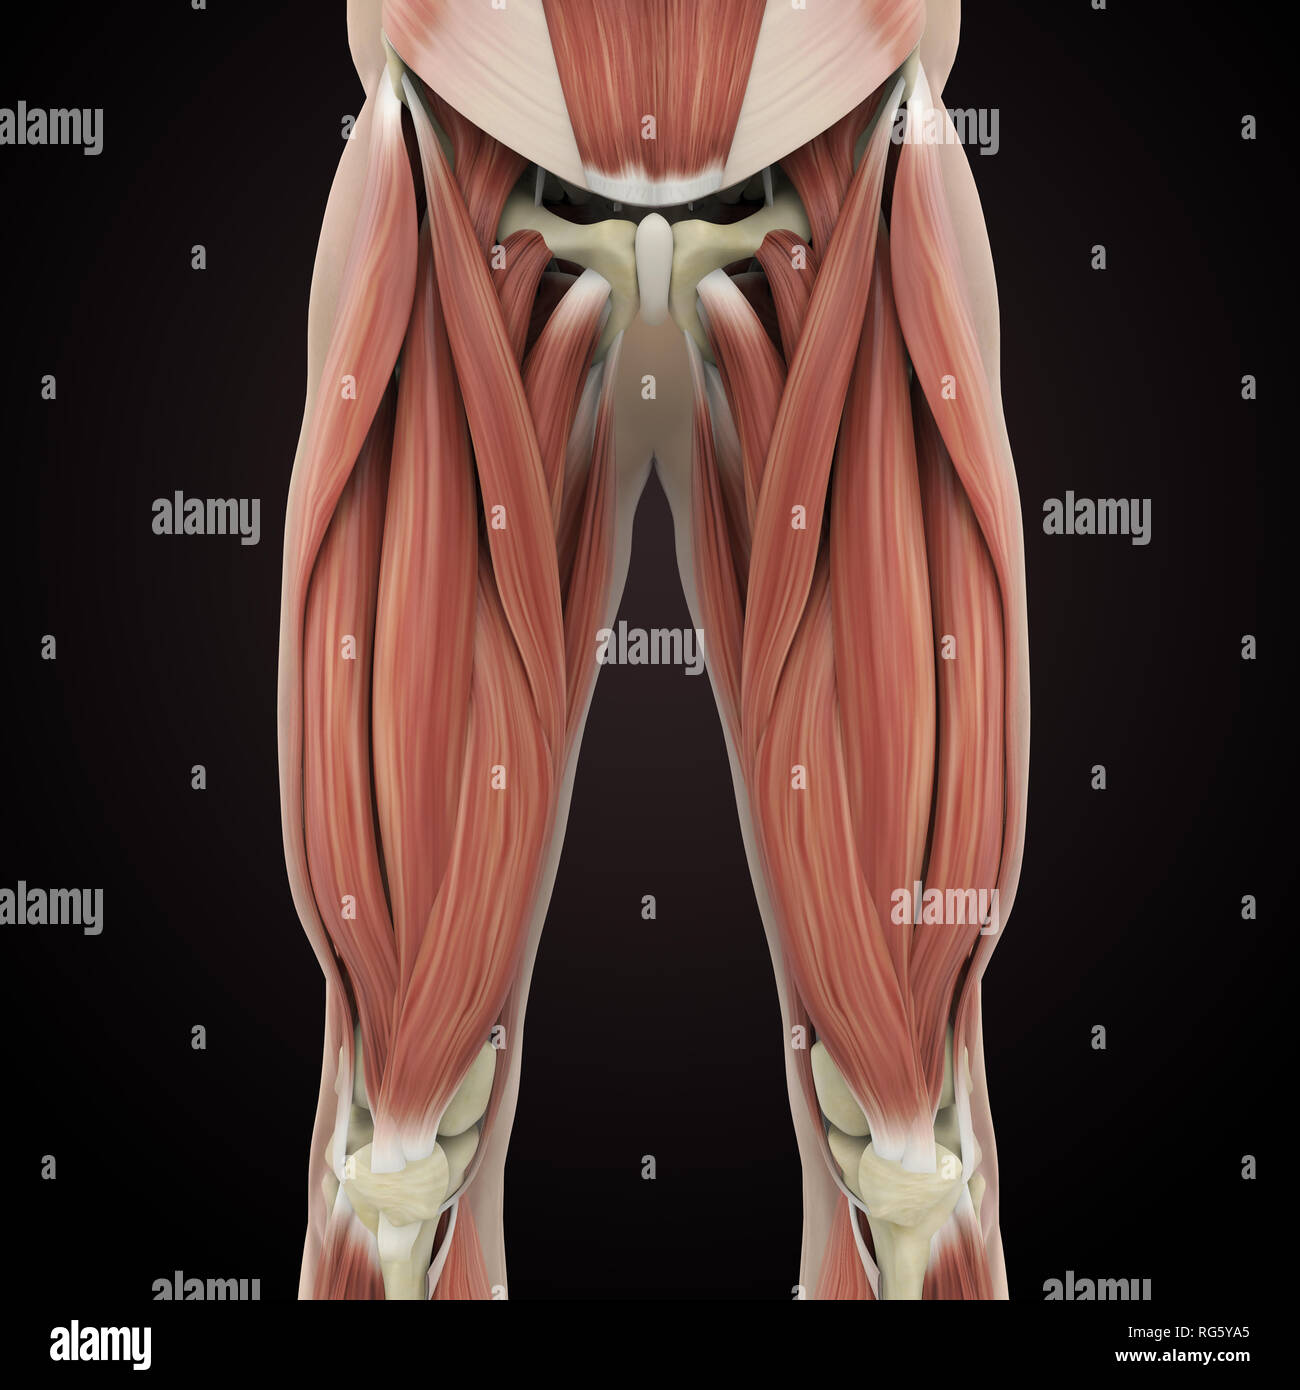 Upper Legs Muscles Anatomy Stock Photo